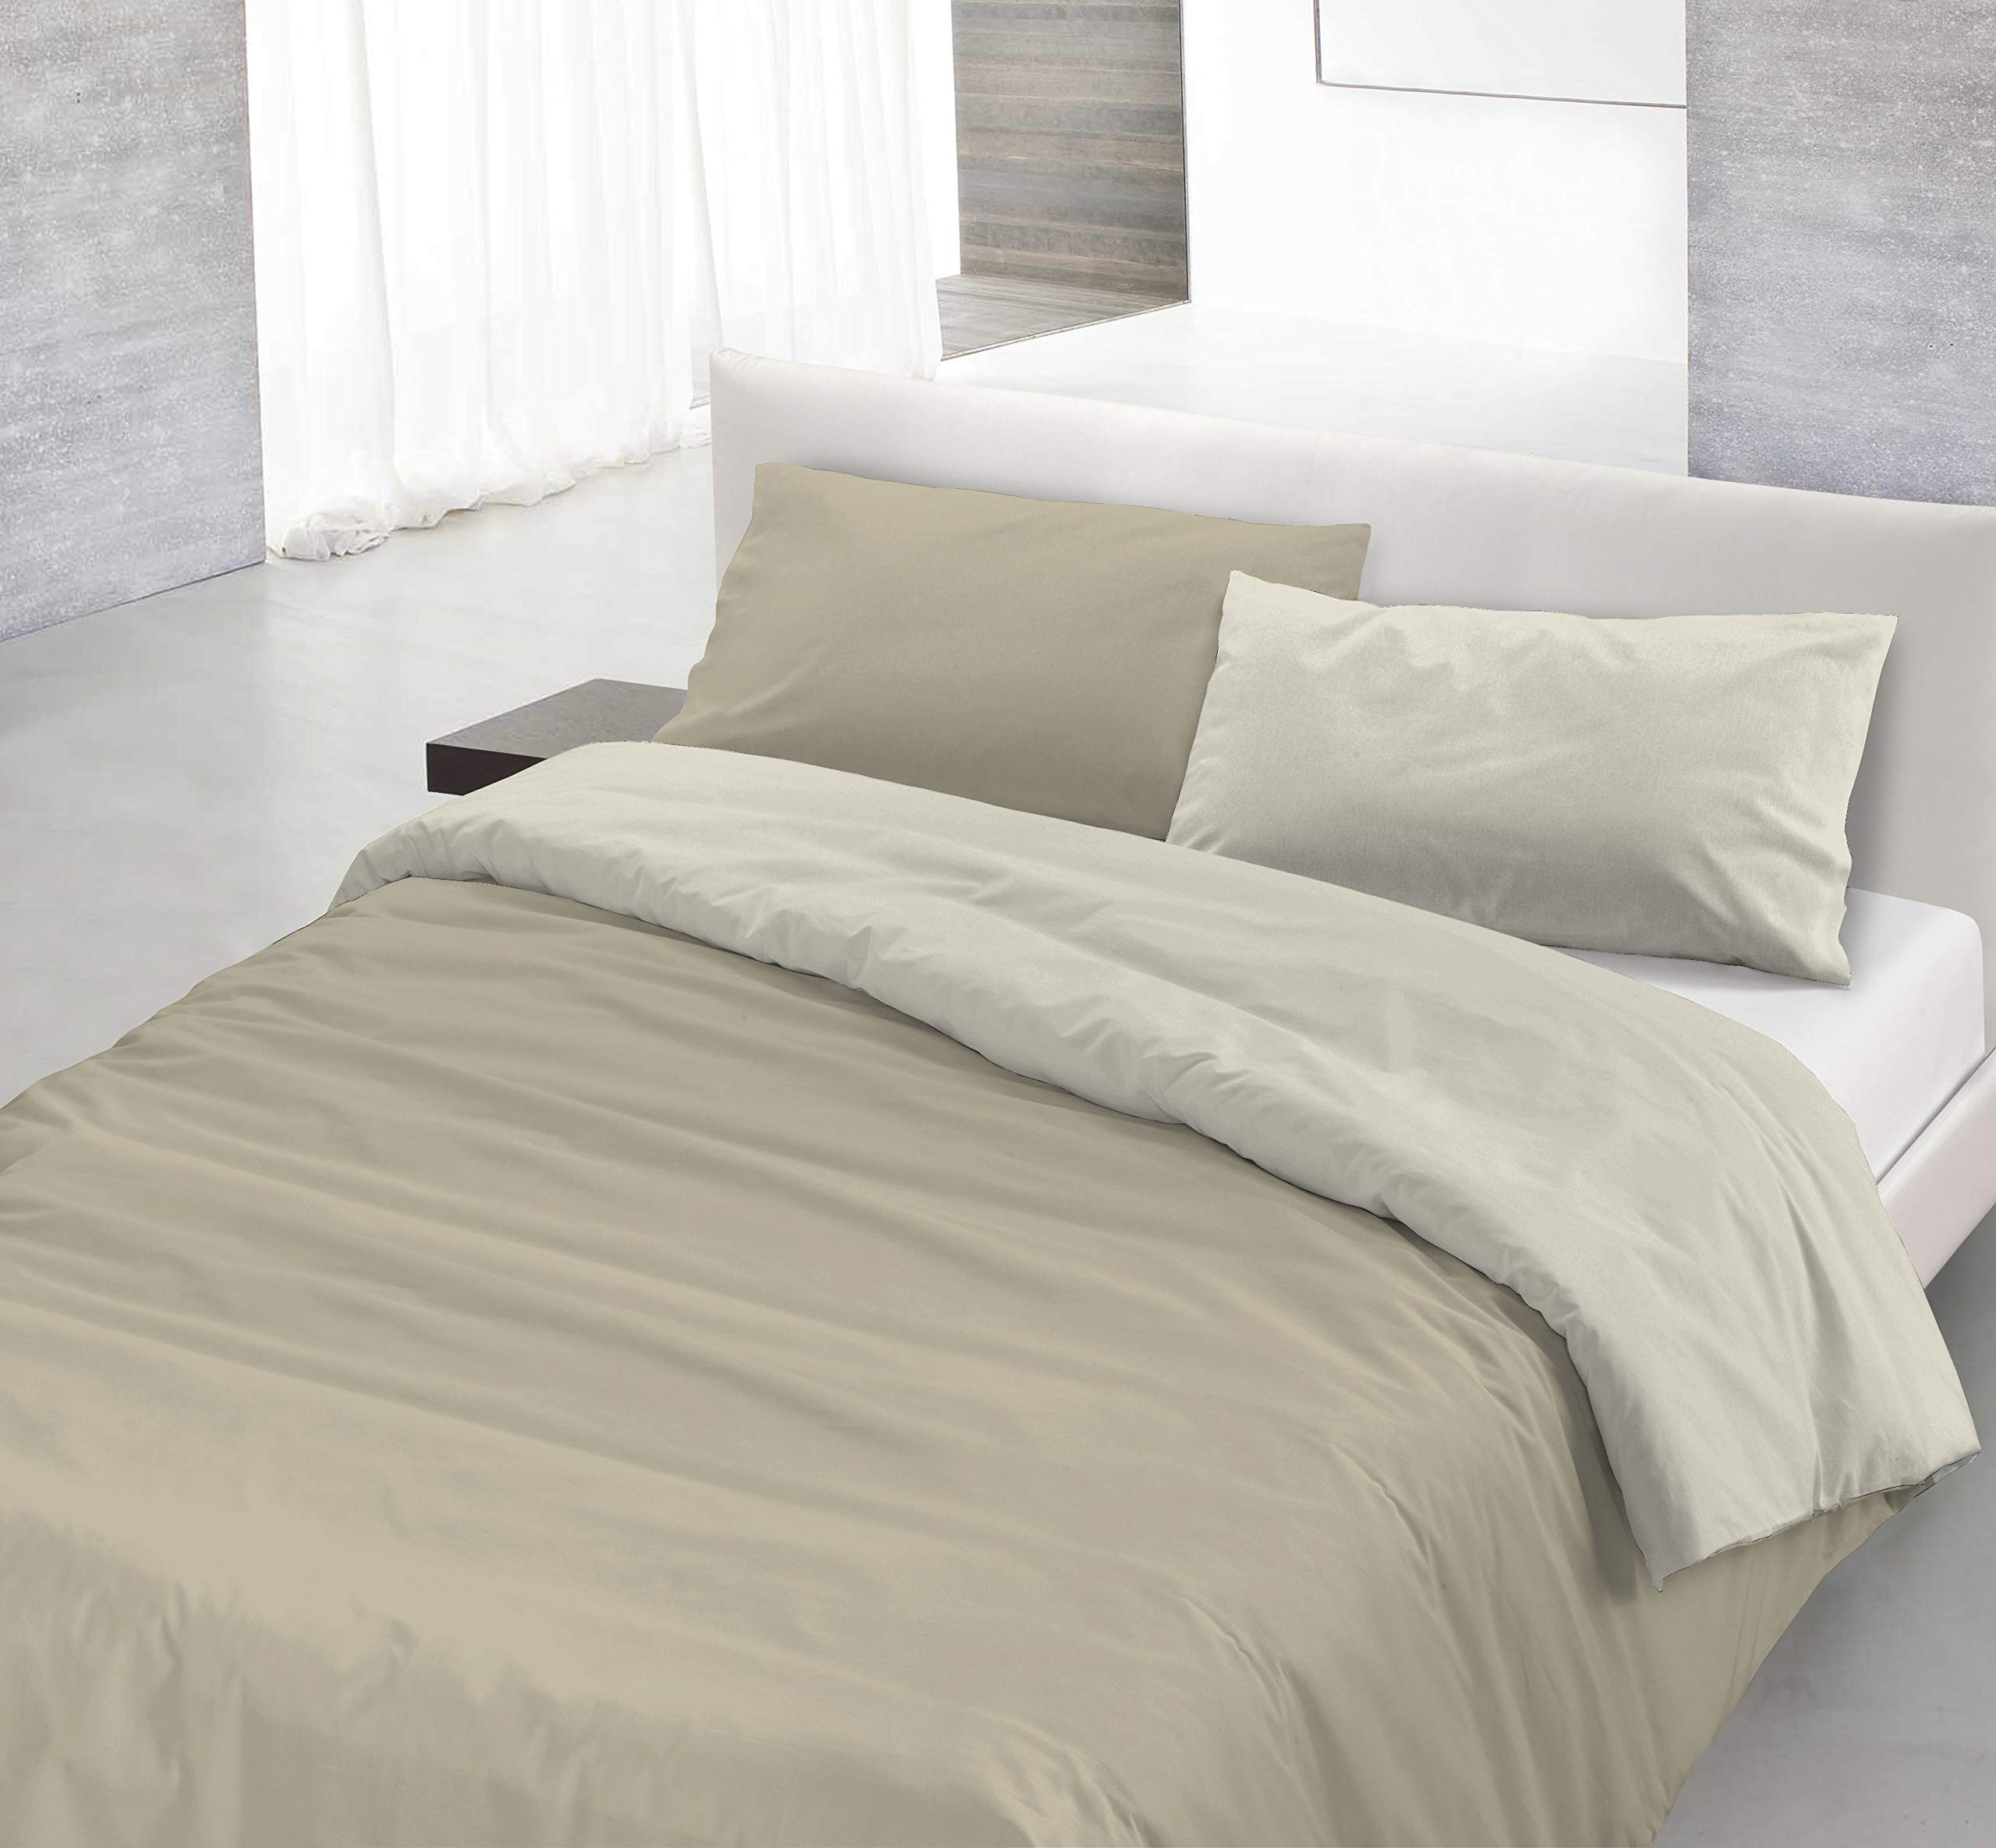 Italian Bed Linen Natural Color Doubleface Bettbezug, 100% Baumwolle, Schwarz/hell Grau, Einzelne